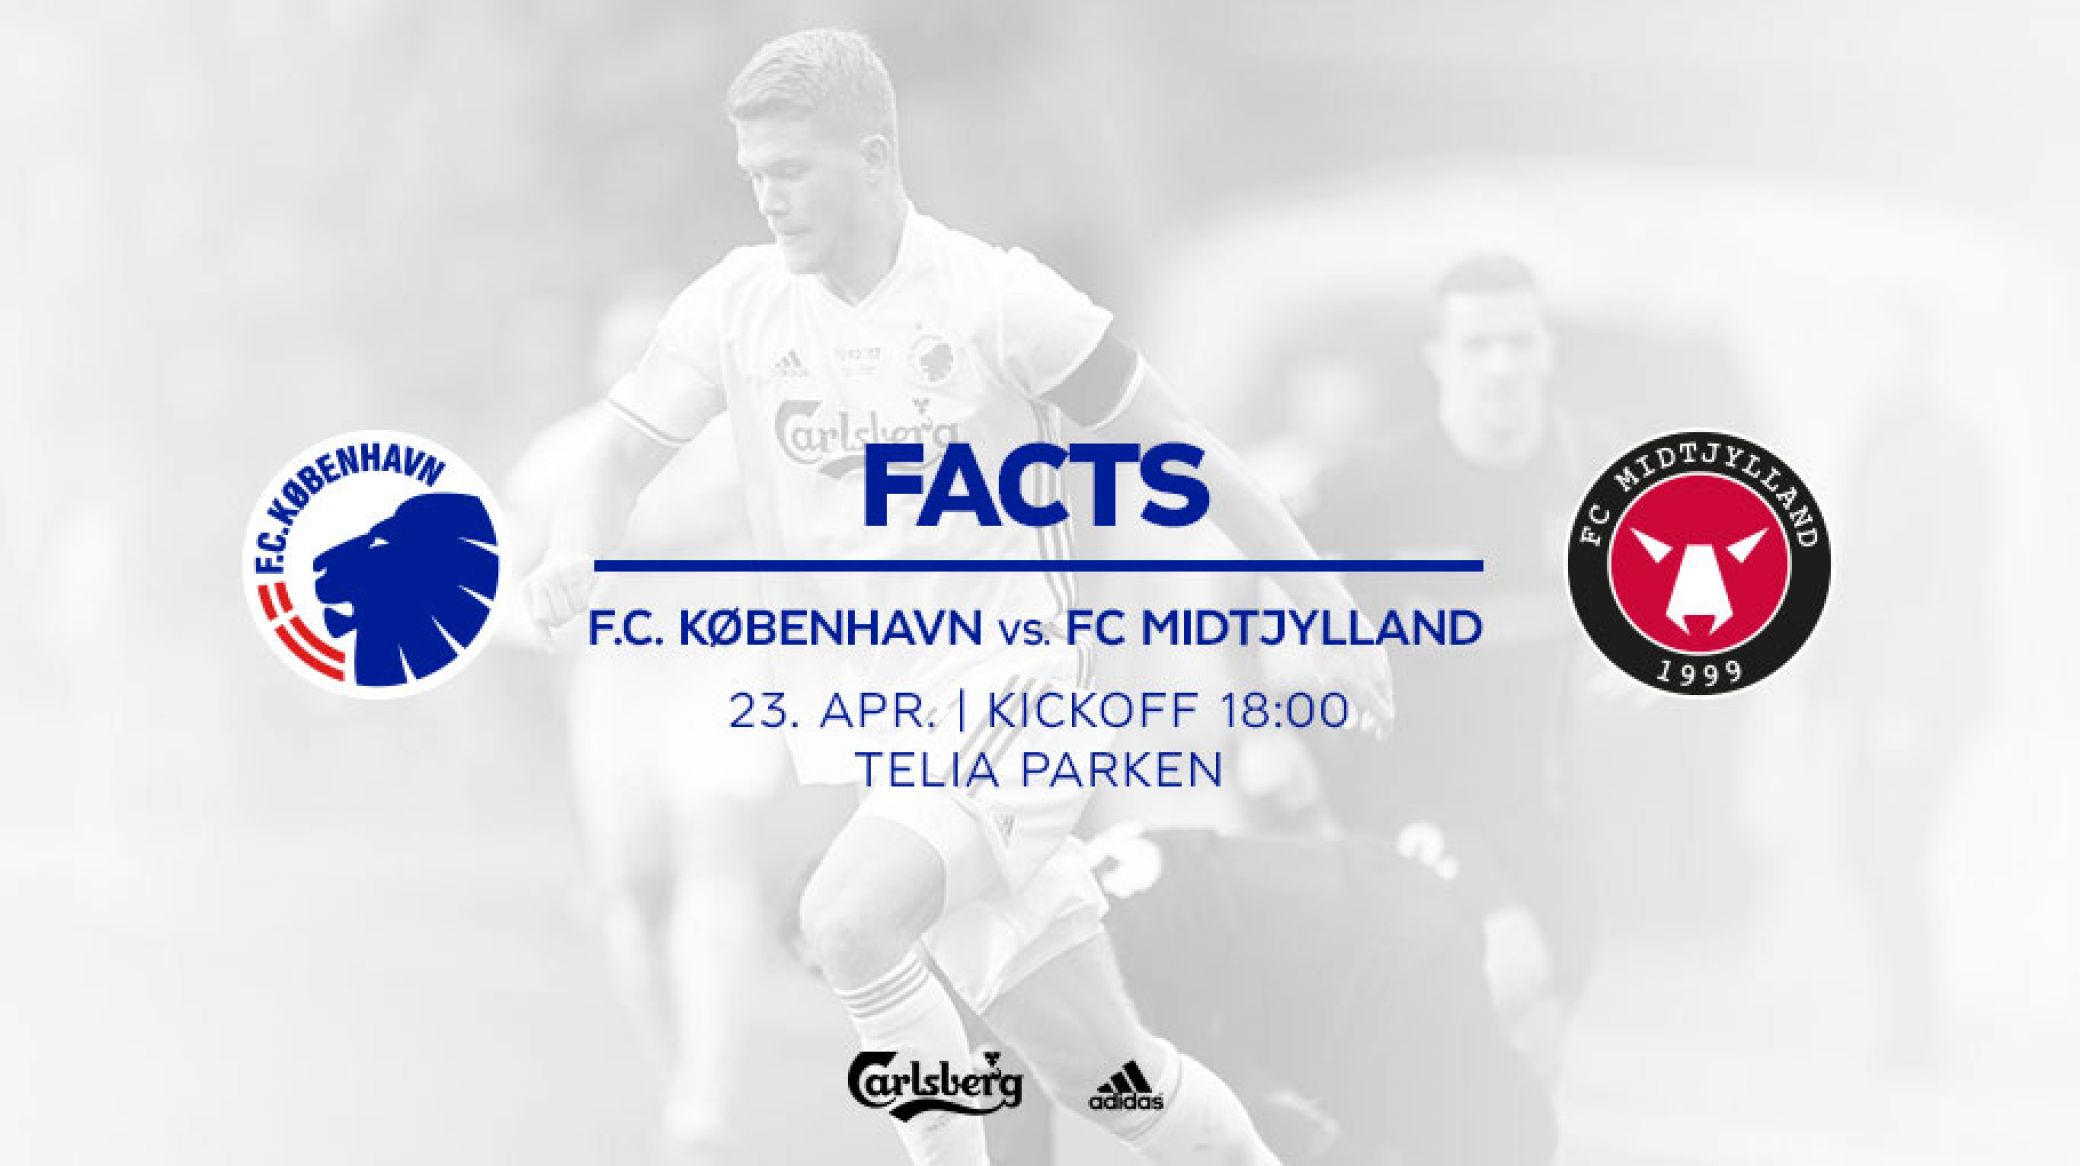 Facts før søndagens kamp mod FC Midtjylland